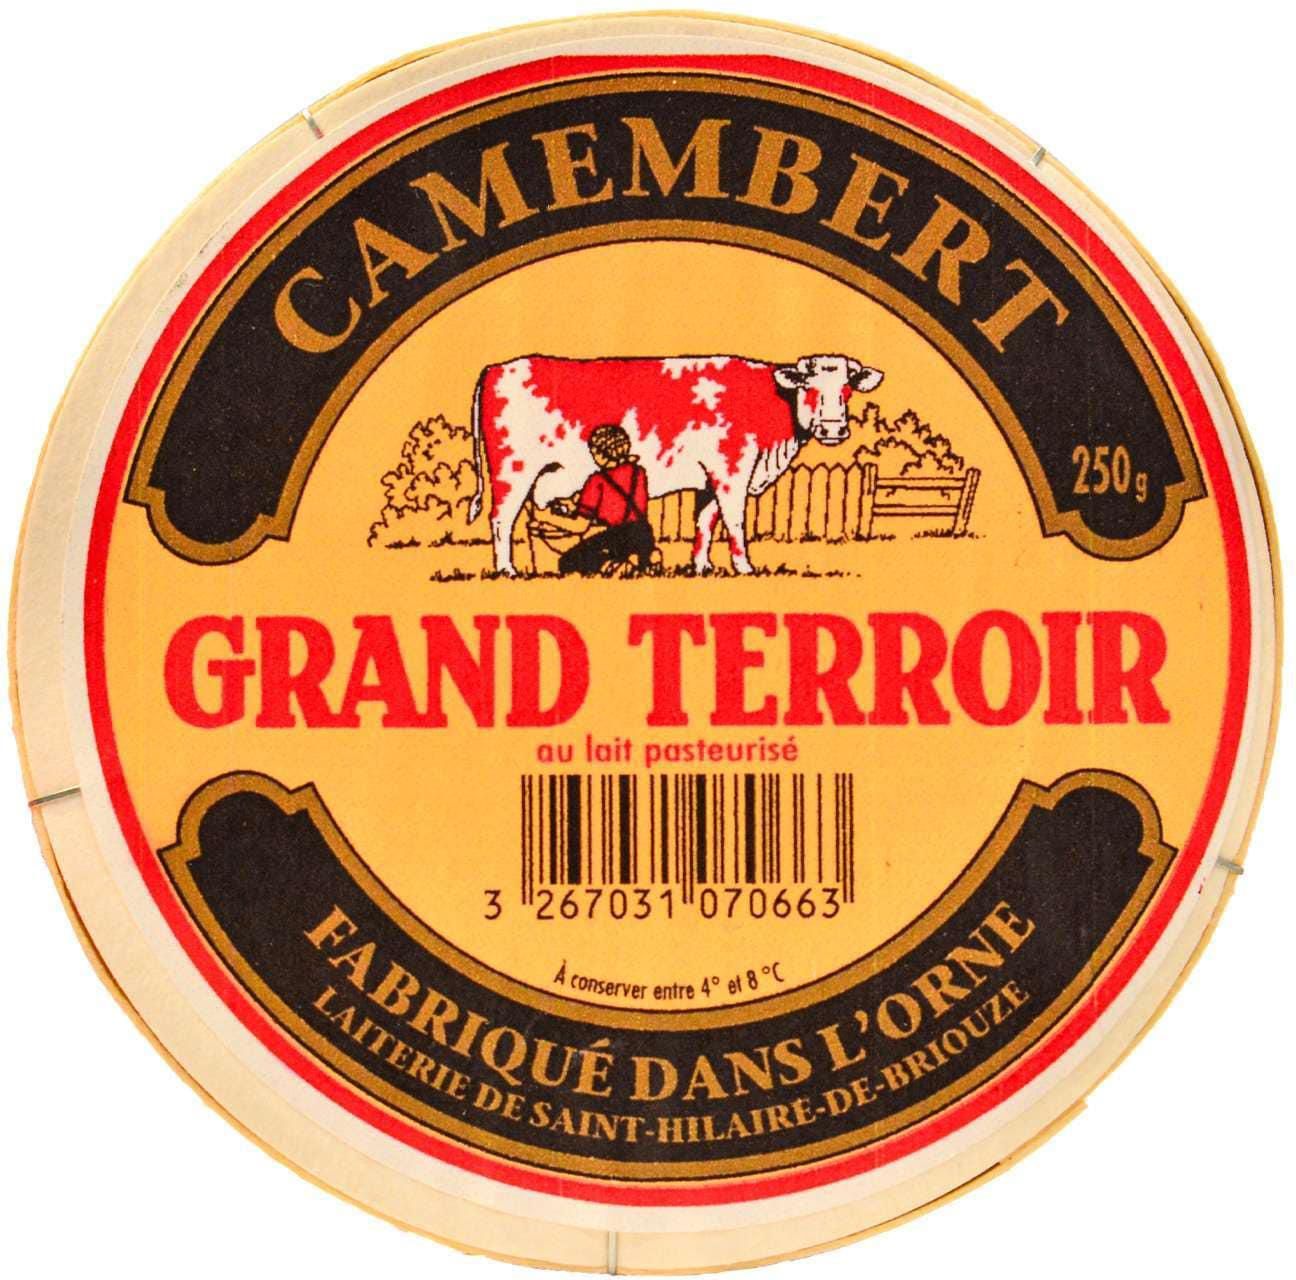 Camembert Grand Terroir 250g